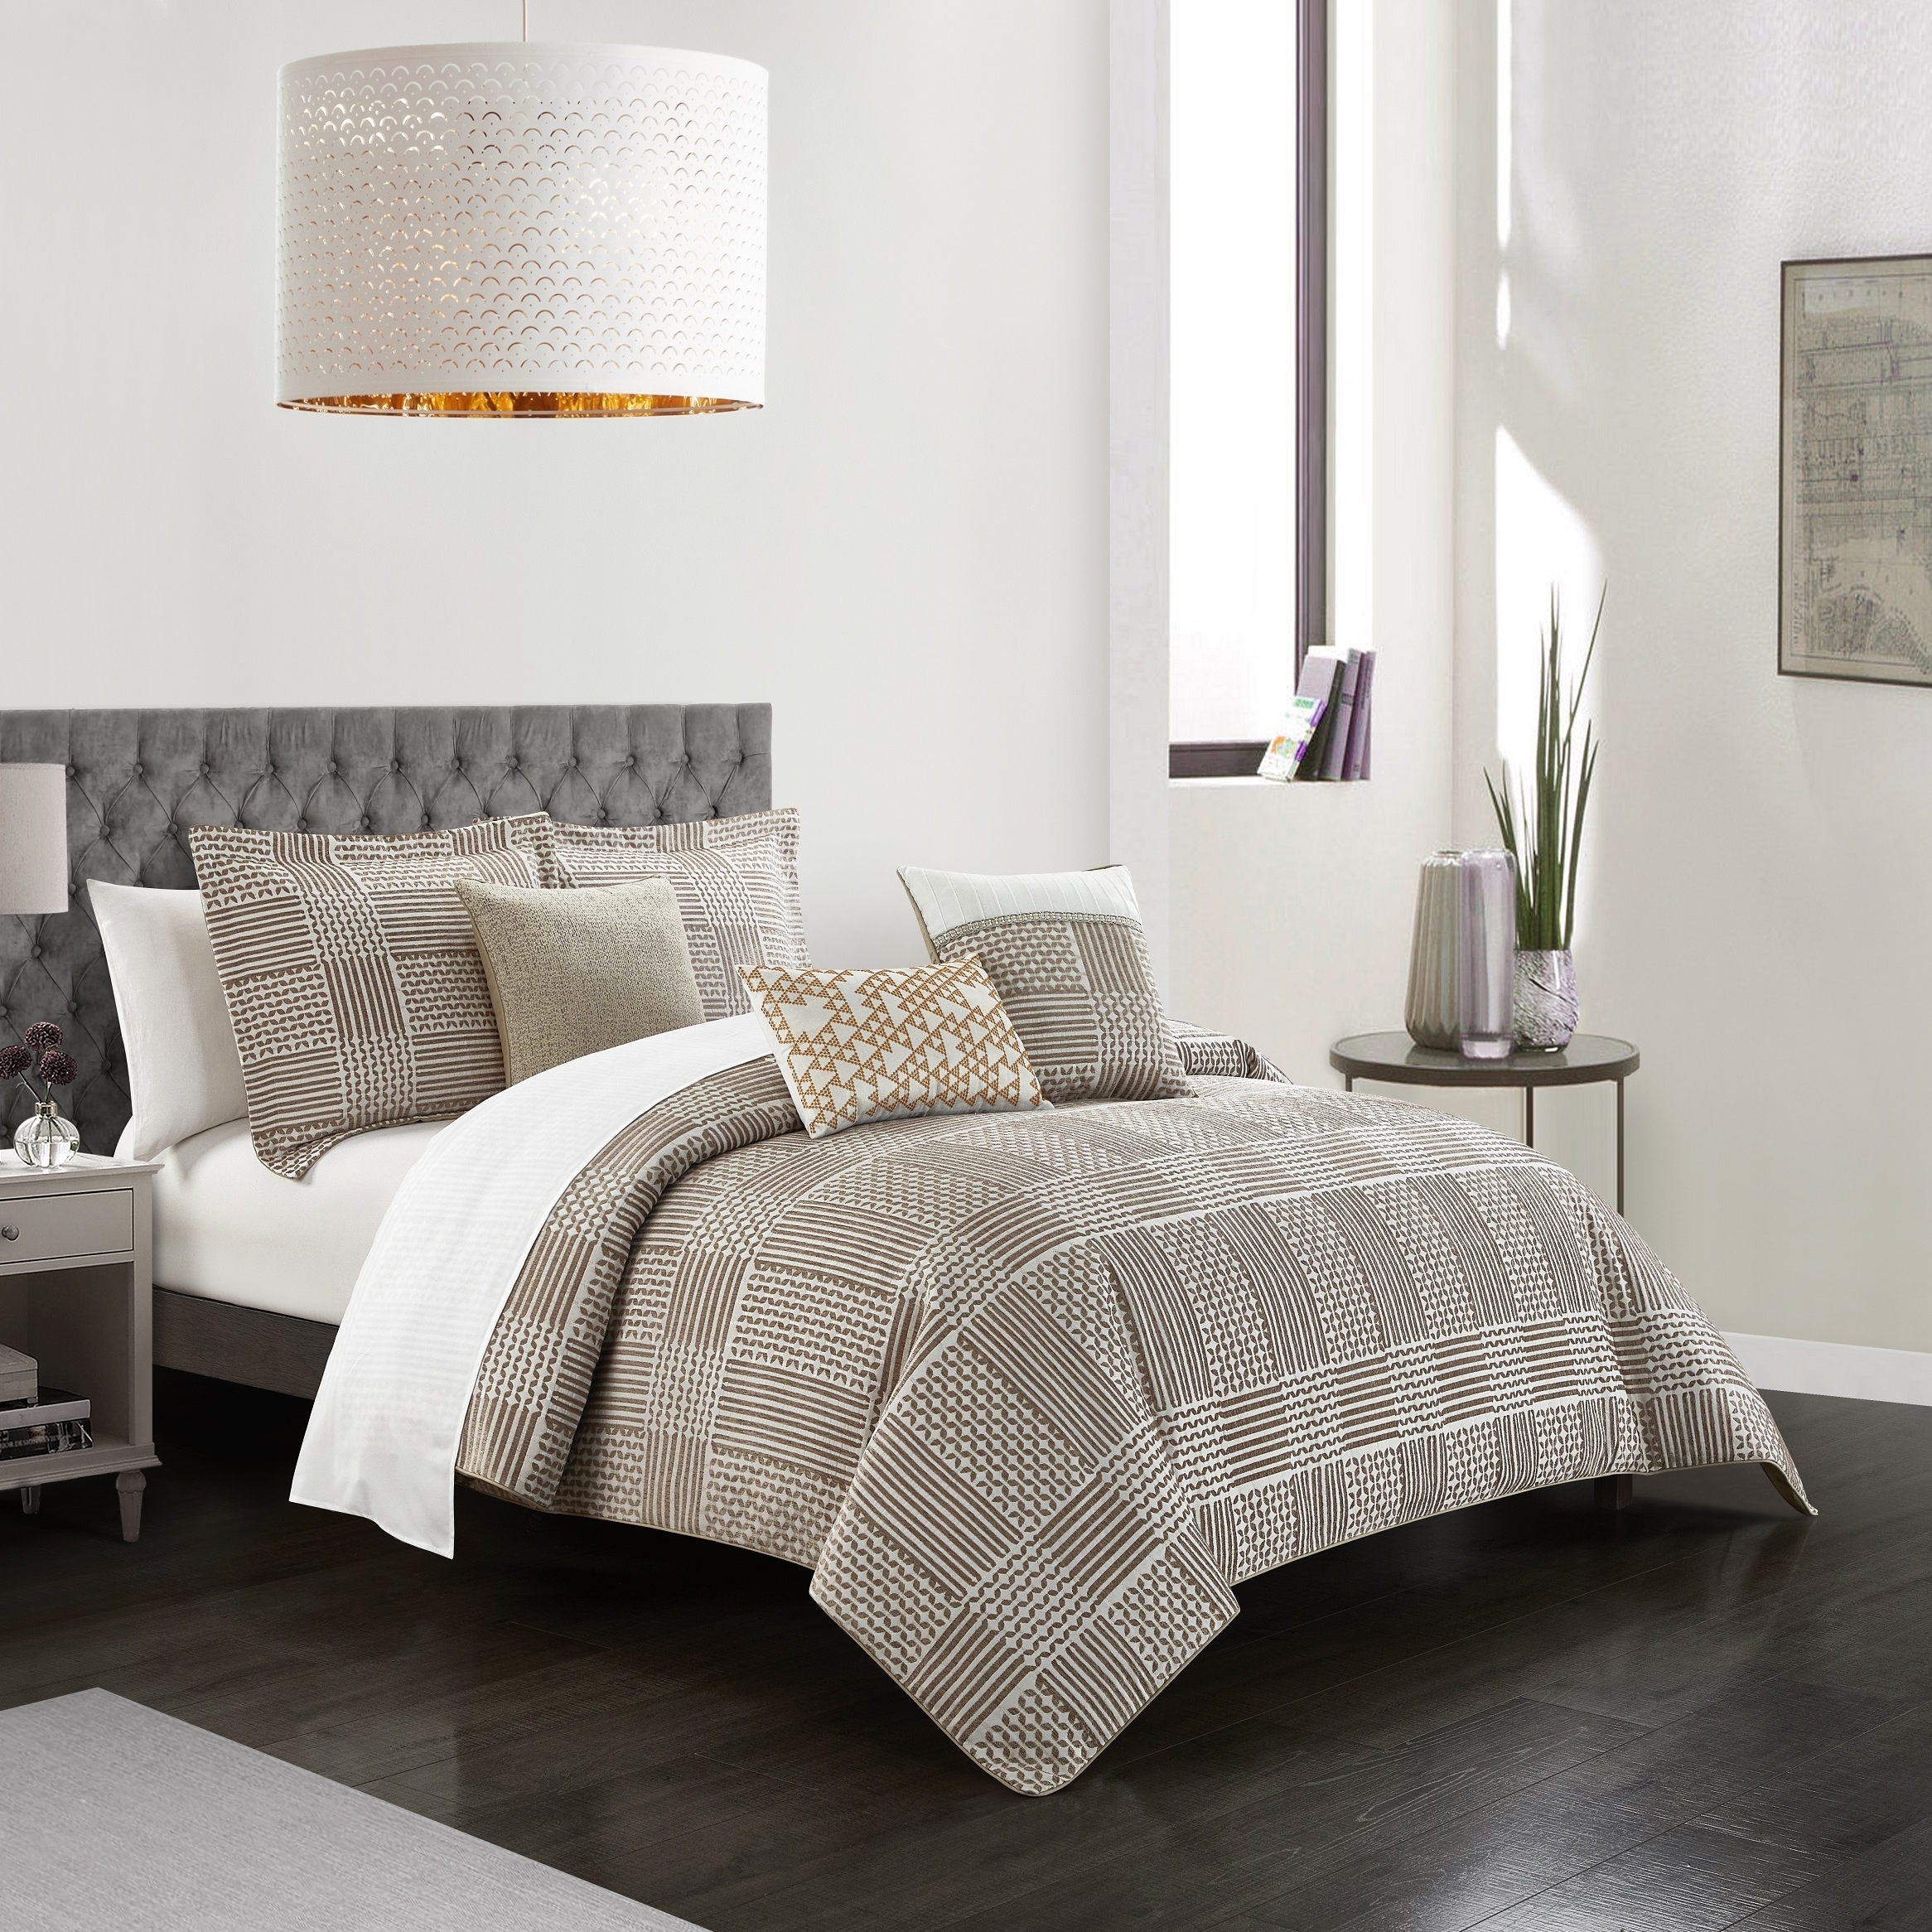 Odhi 6 Or 10 Piece Comforter Set Chenille Geometric Pattern Design Bedding - Grey, King